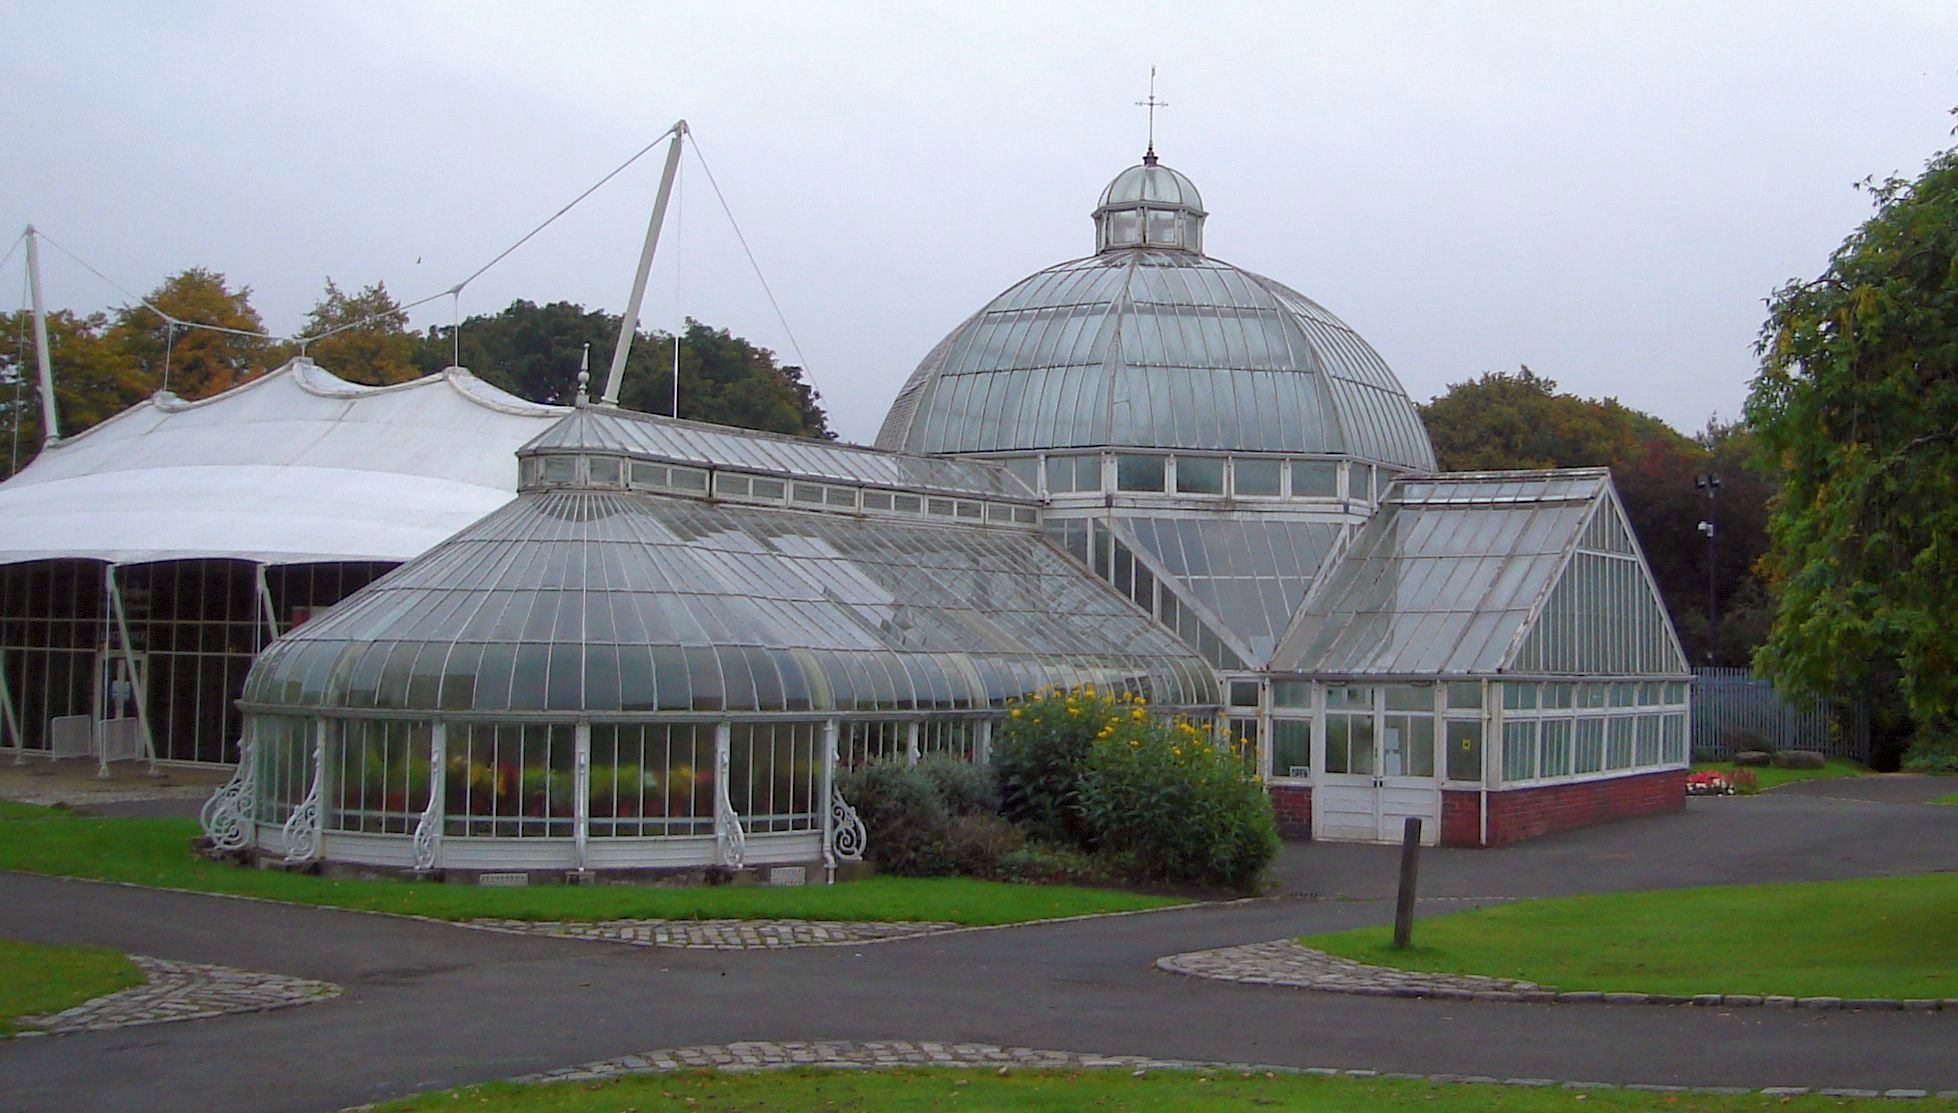 The Winter Gardens in Tollcross Park in Glasgow